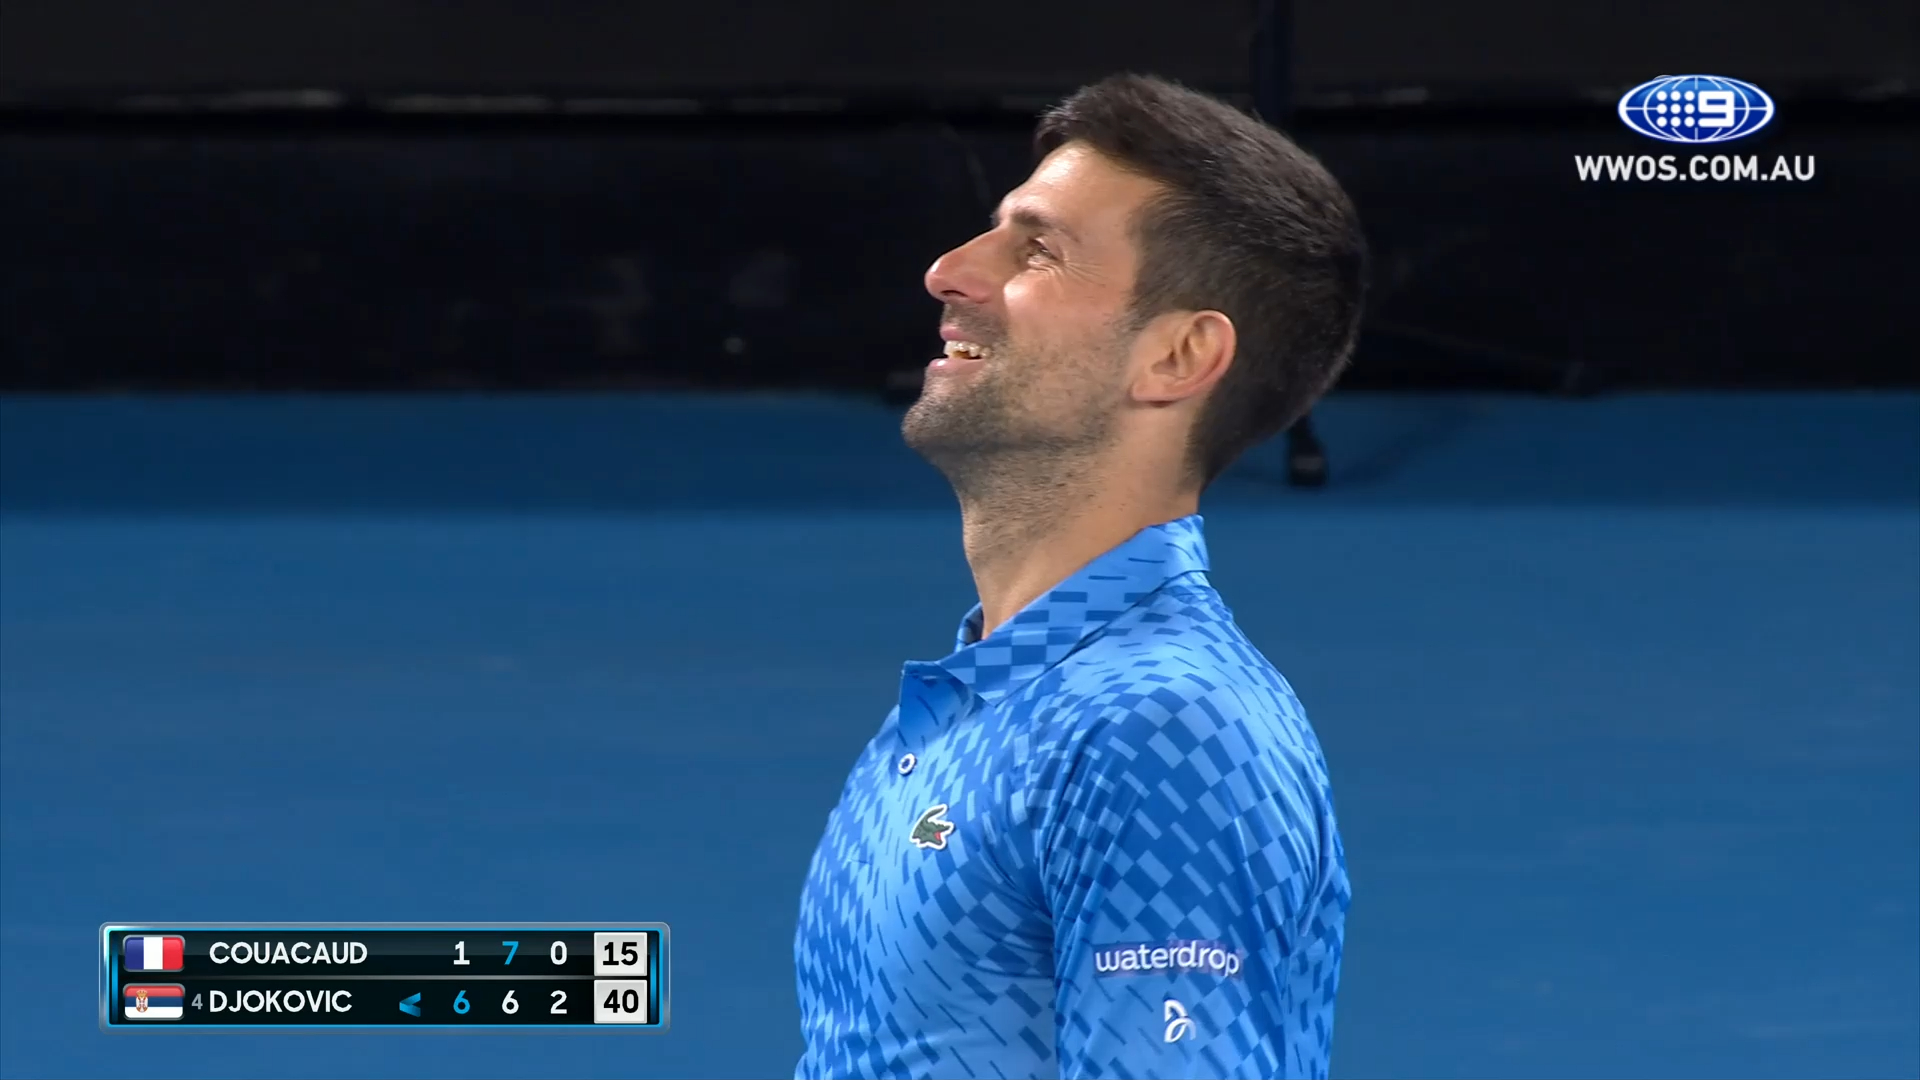 Djokovic's cheeky quip to crowd